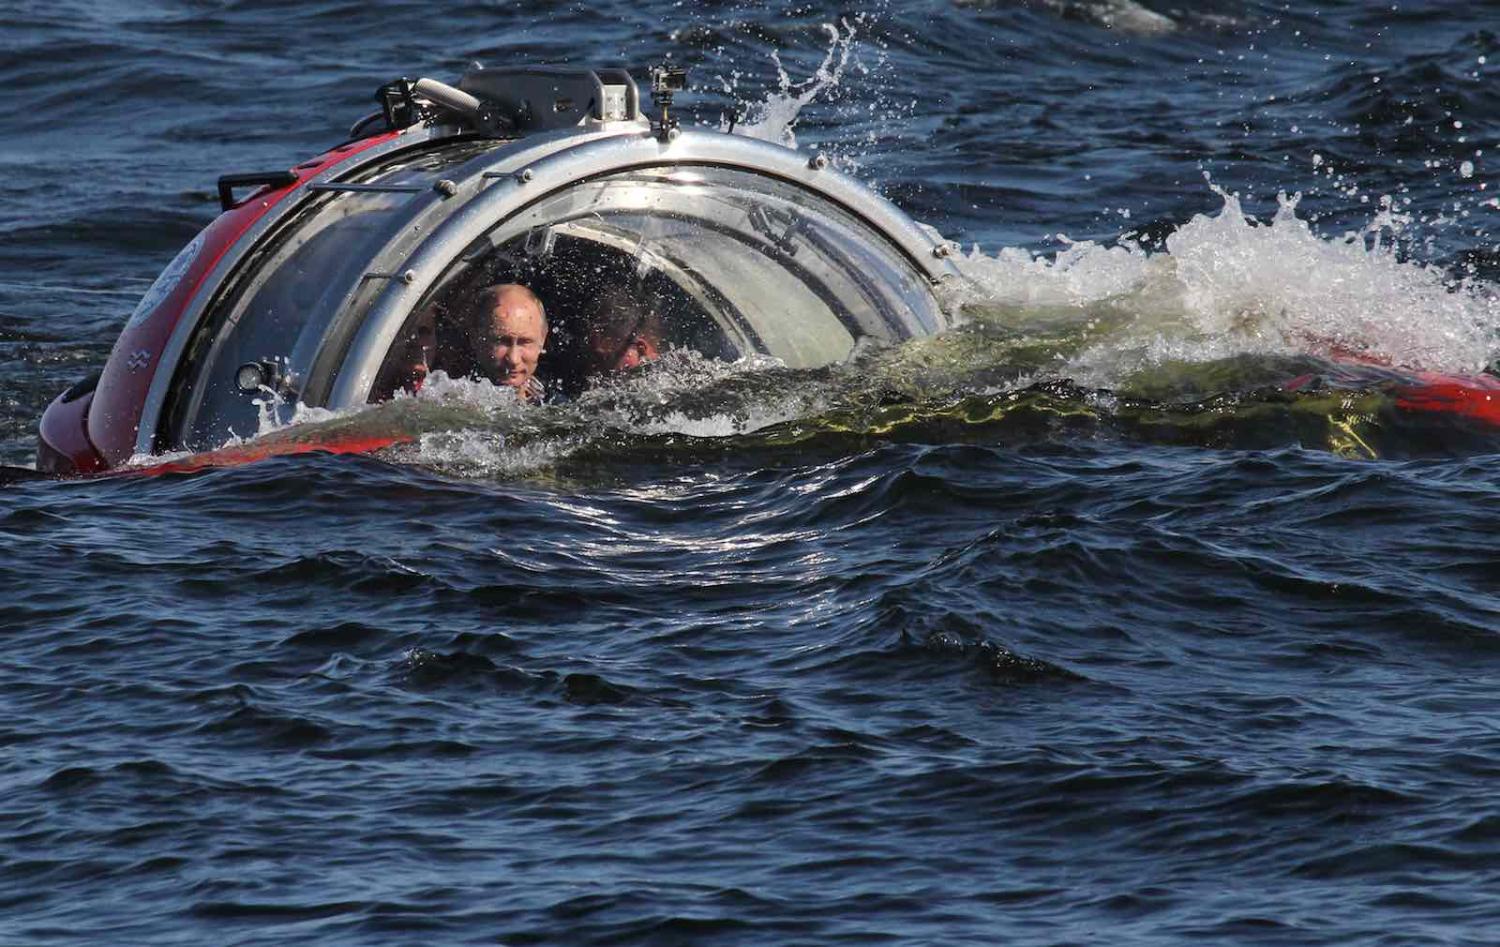 Russian President Vladimir Putin in a Baltic Sea submersible in 2013 near Gotland Island, Russia (Photo: Sasha Mordovets/Getty)